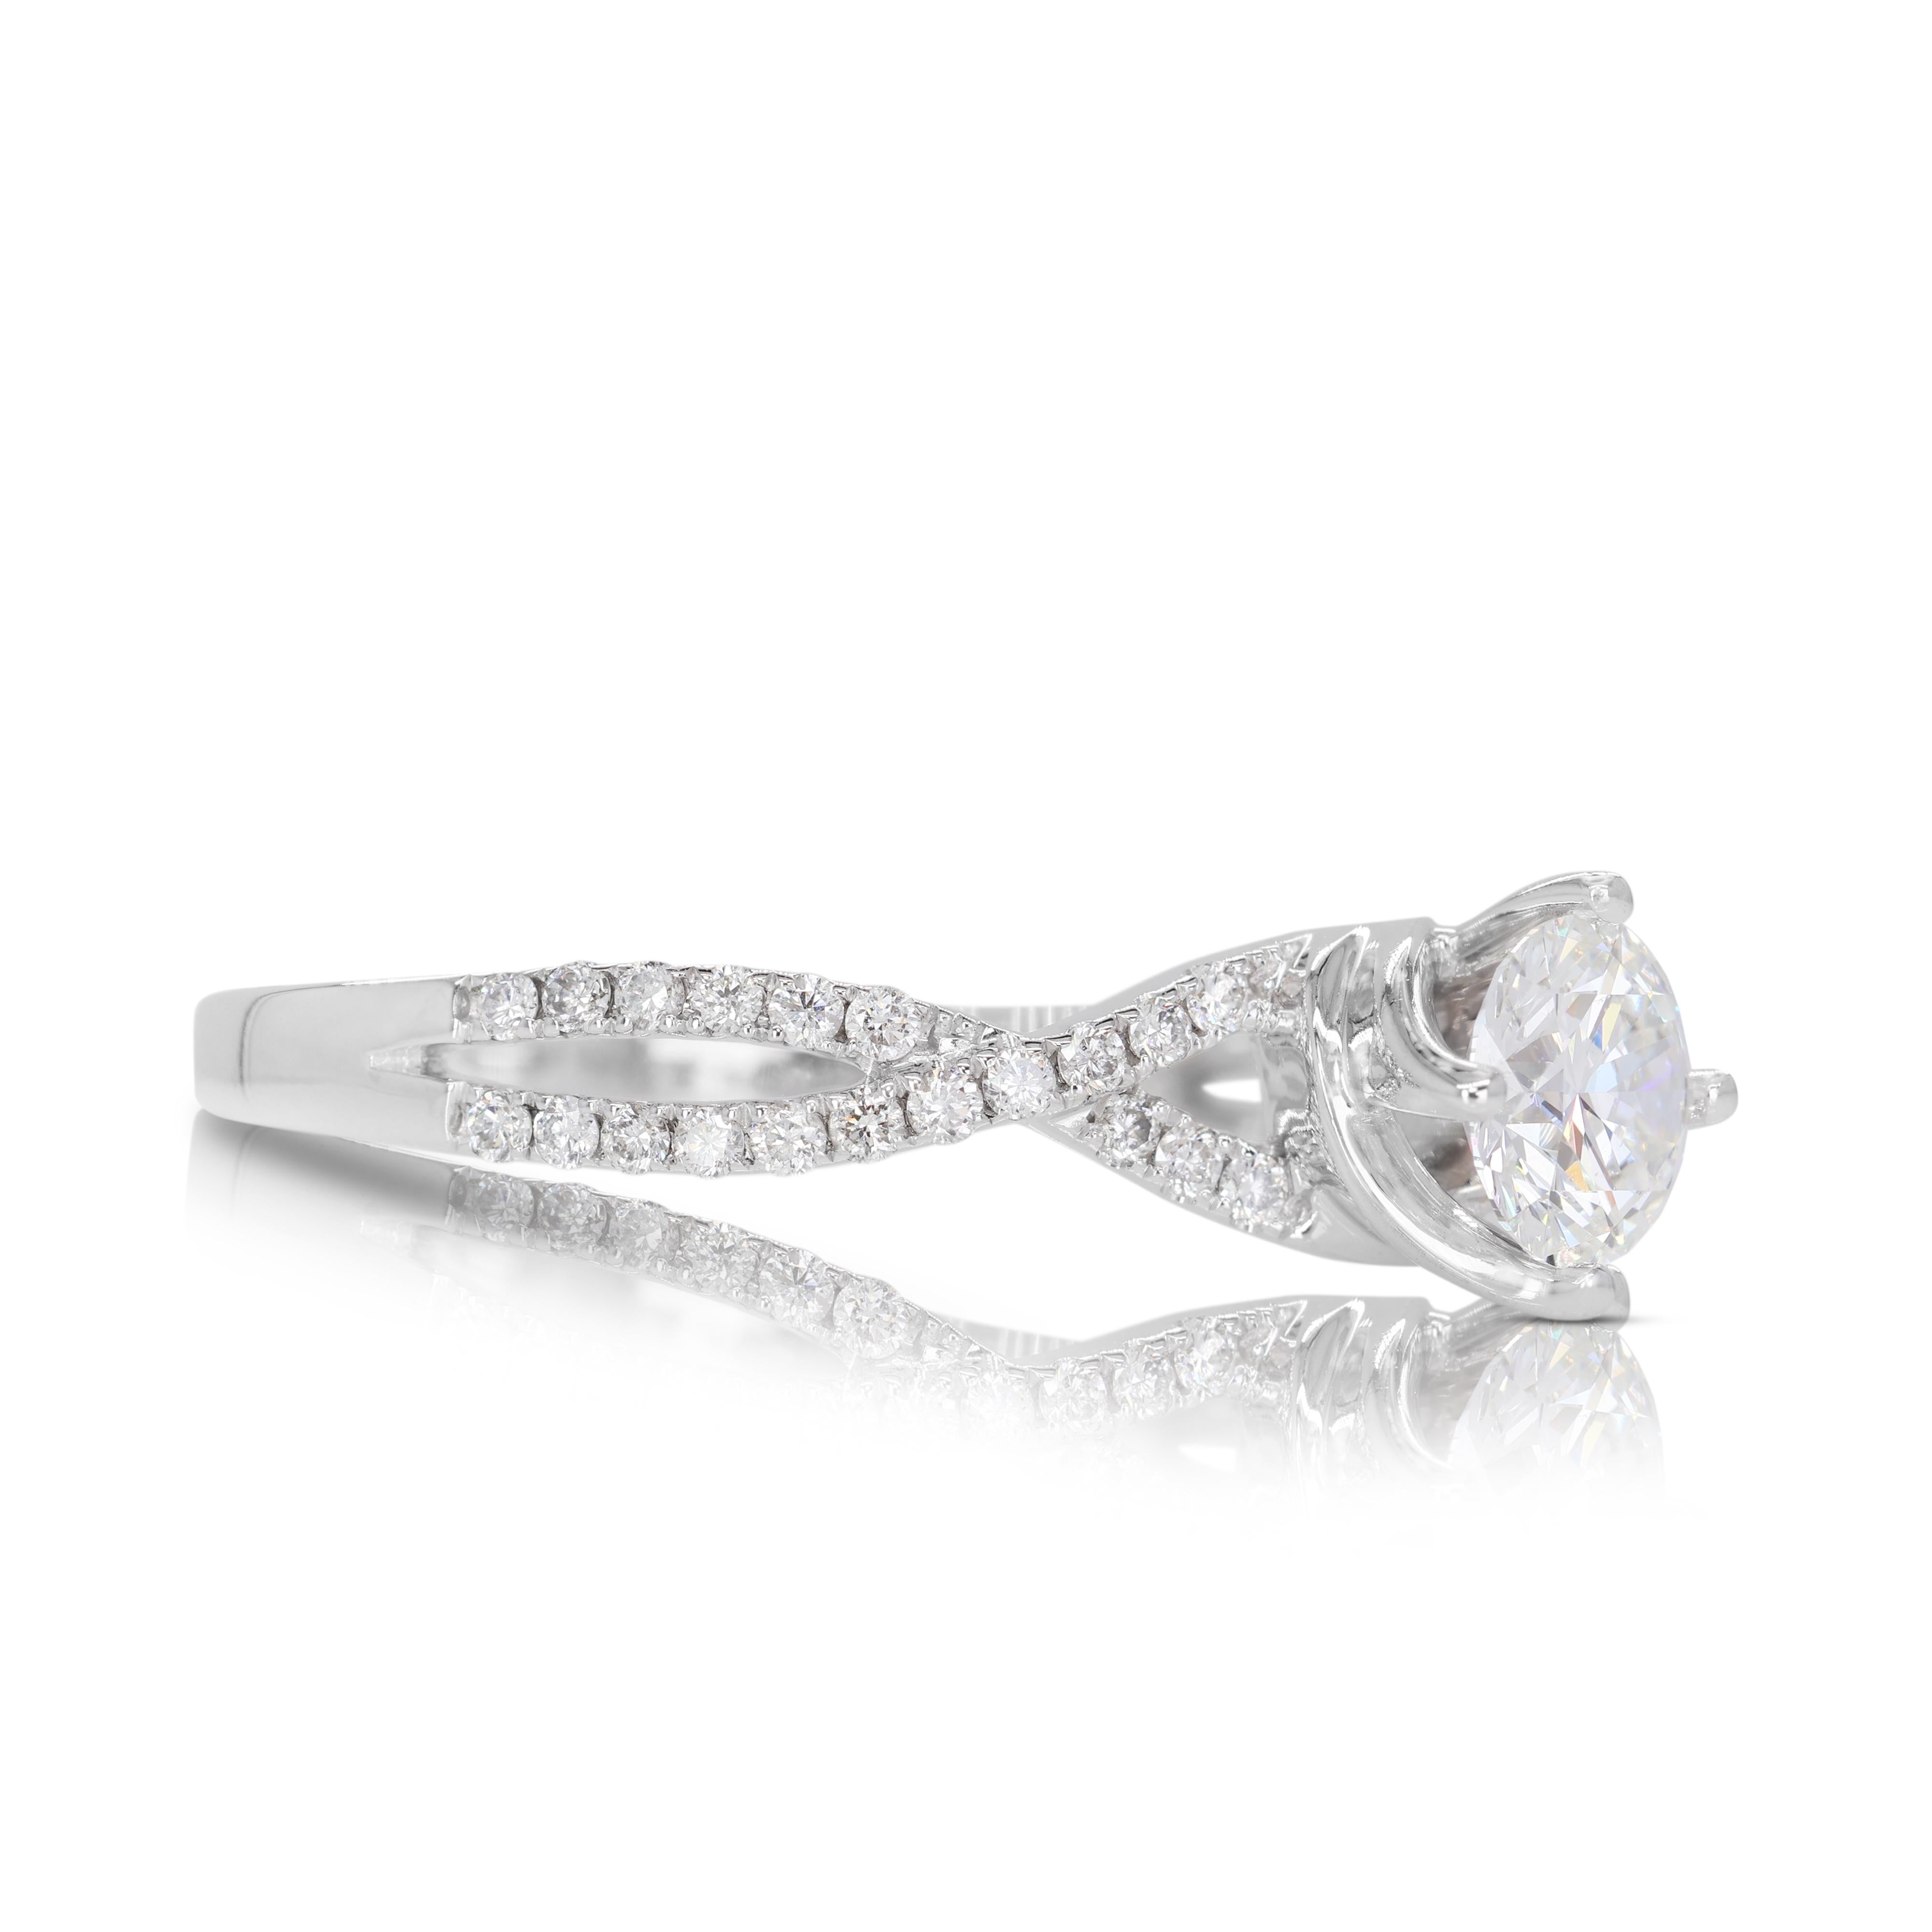 Round Cut Elegant 0.70ct Diamond Halo Ring set in 18K White Gold For Sale